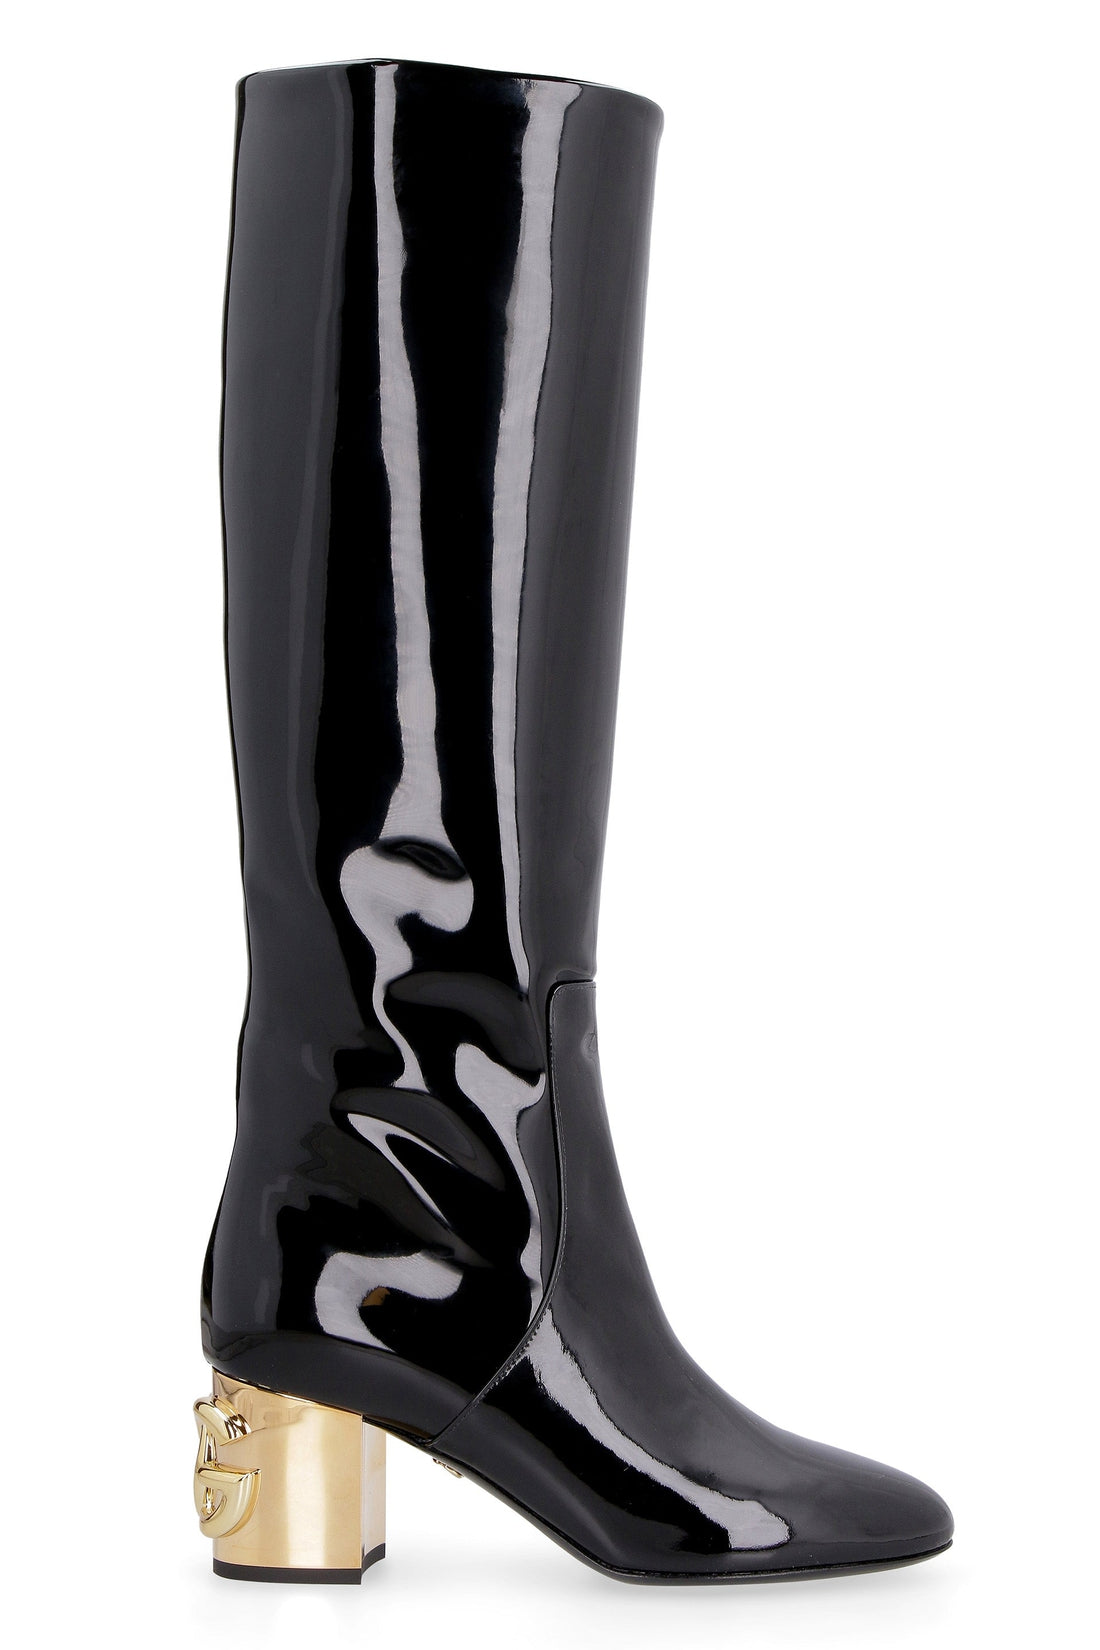 Dolce & Gabbana-OUTLET-SALE-Patent leather boots-ARCHIVIST